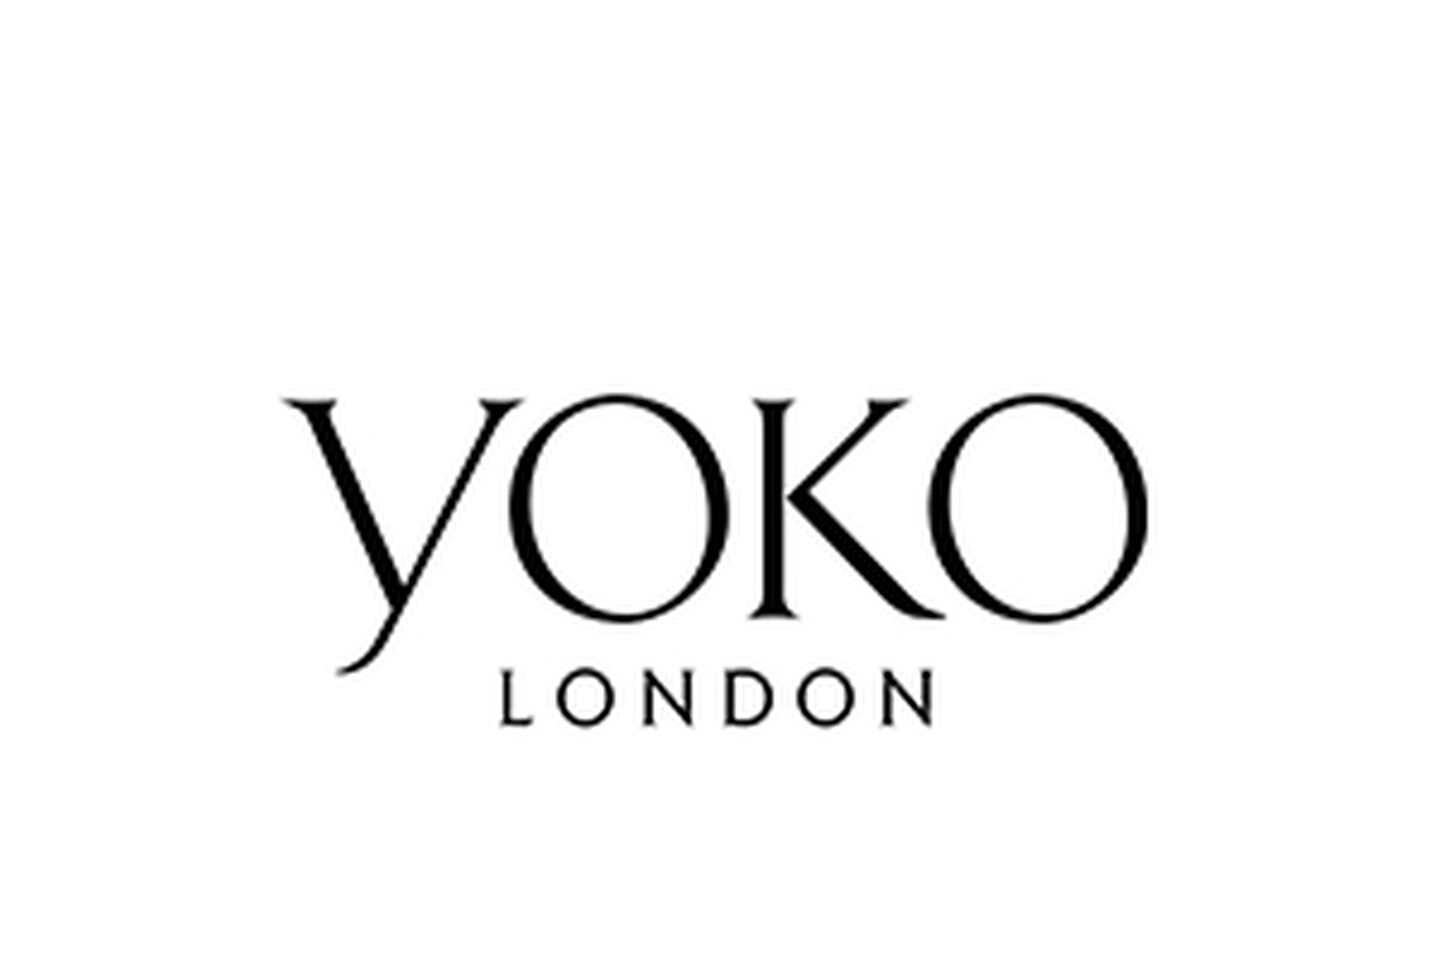 Yoko London Logo